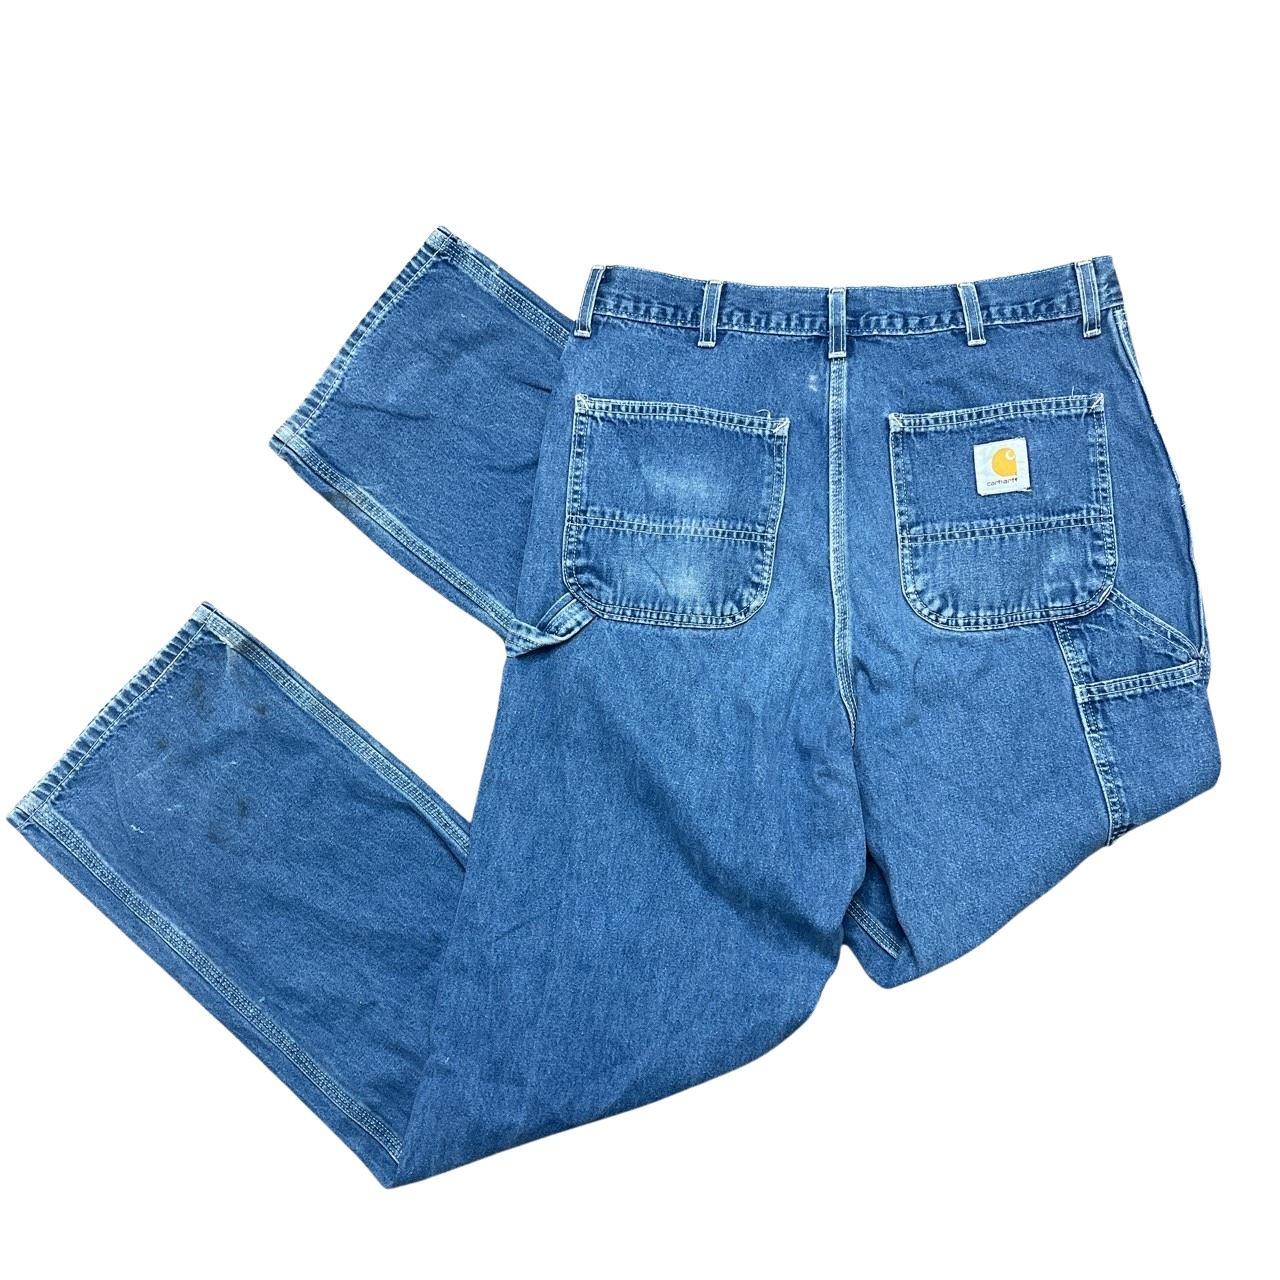 vintage cargo carhartt denim jeans has marks - Depop